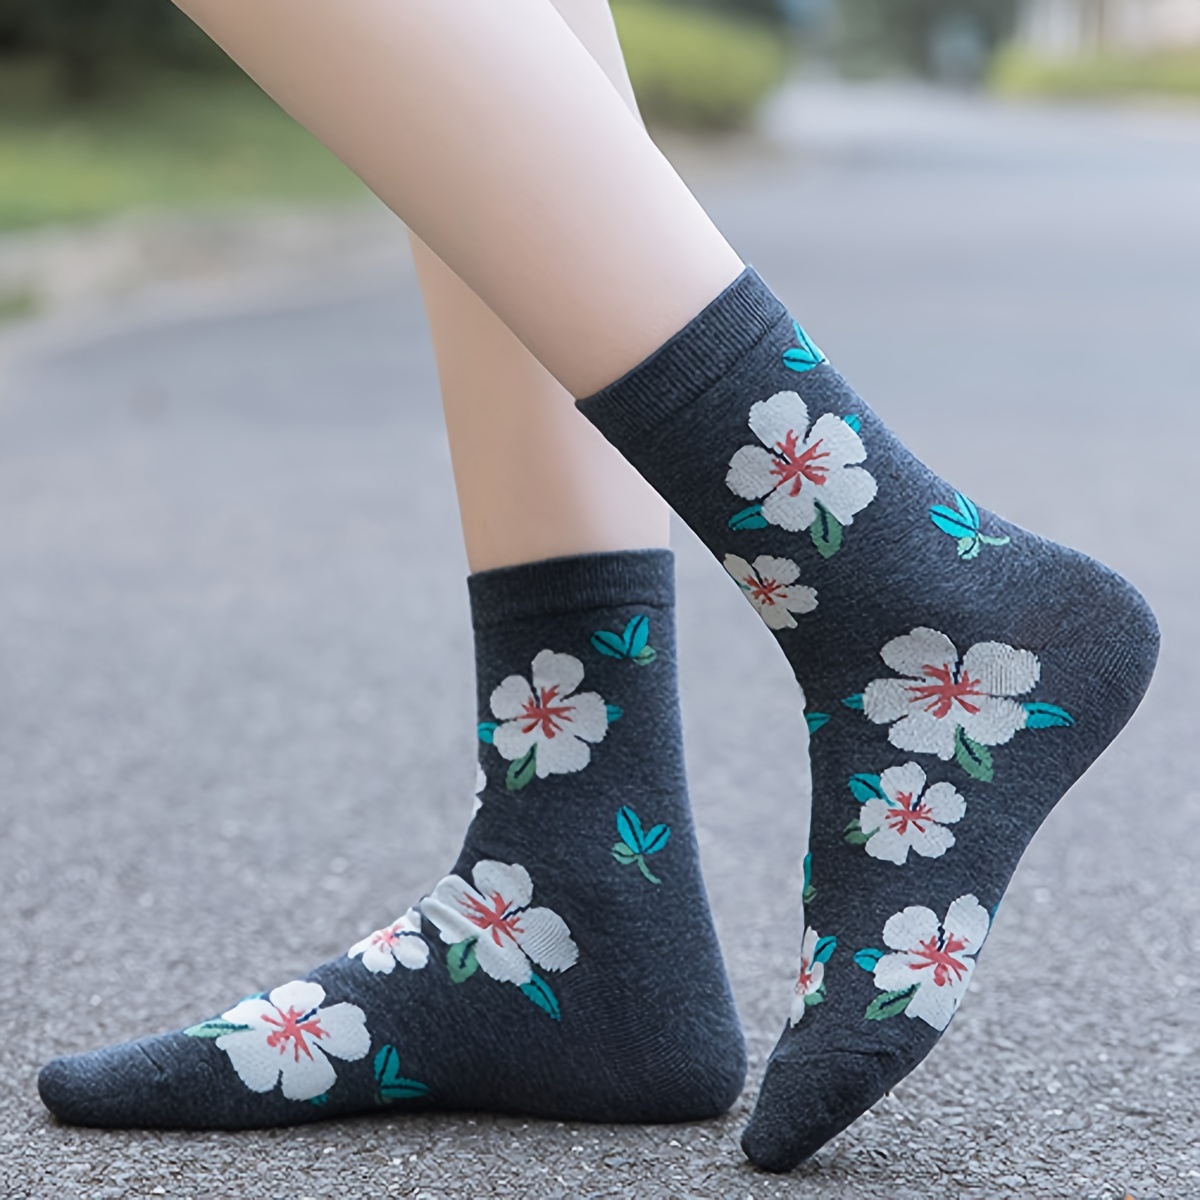 free shipping Women Socks 5 pairs Novelty Casual Cotton Crew Socks Shop ...